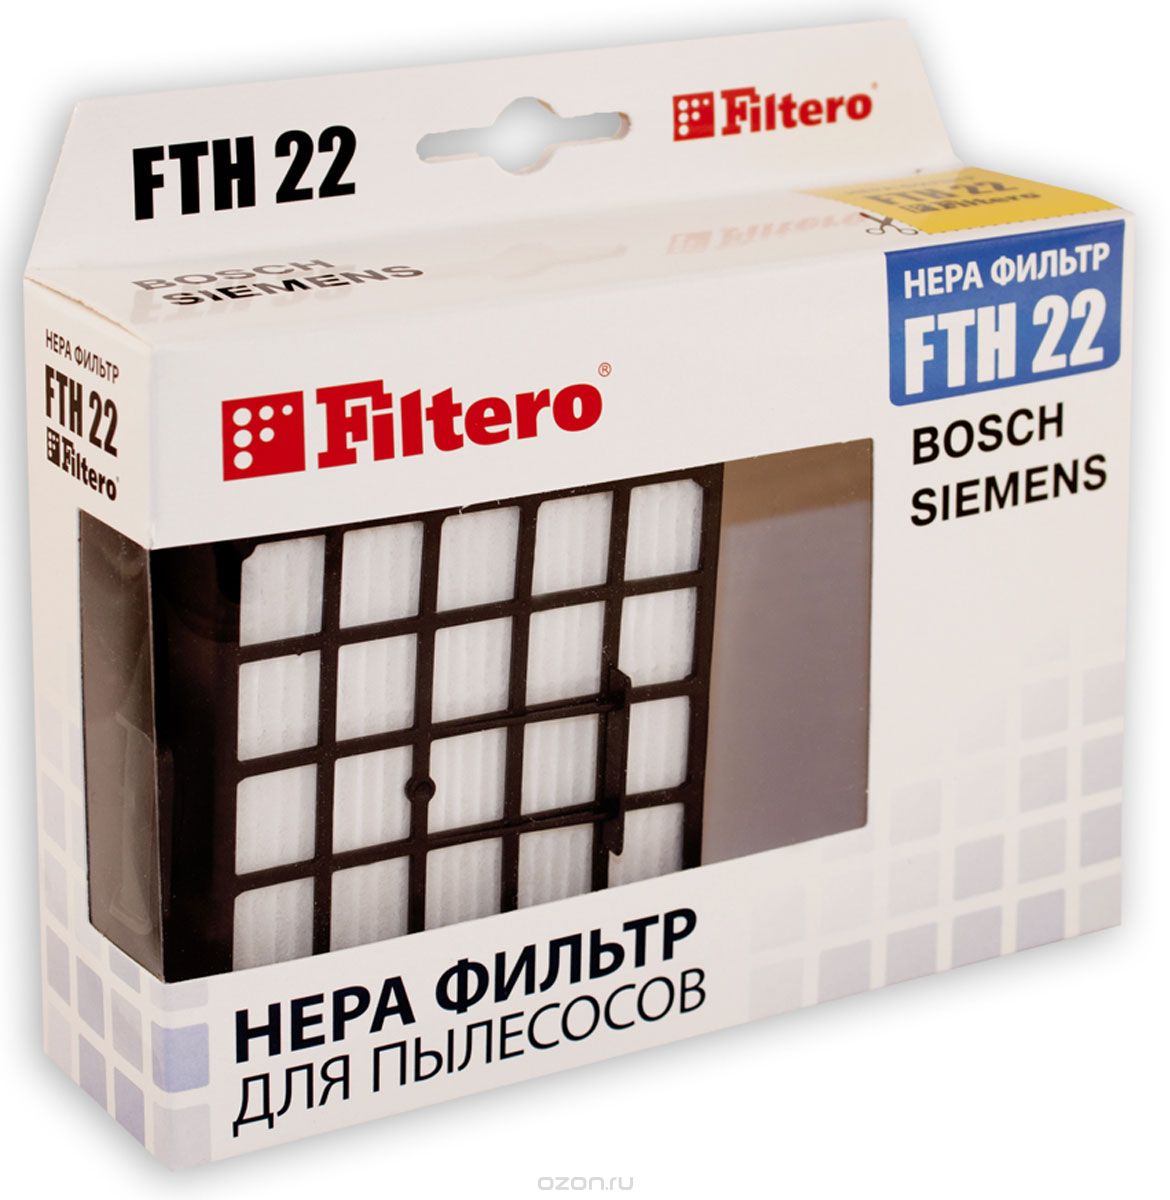 Filtero FTH 22 BSH HEPA-   Bosch, Siemens